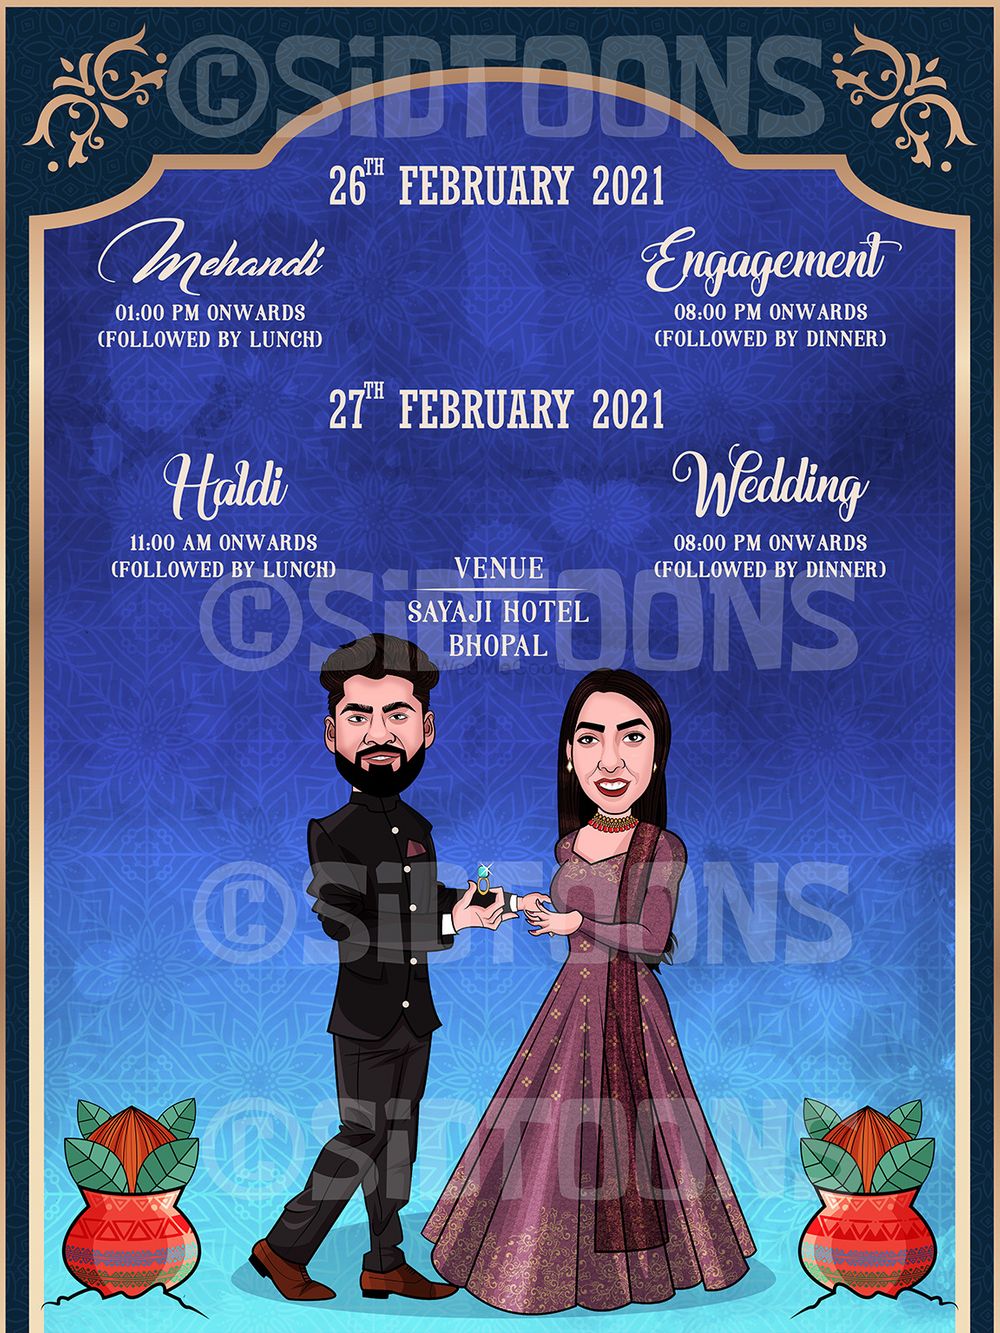 Photo From Dhriti weds Deepanshu_Wedding Card - By Sidtoons